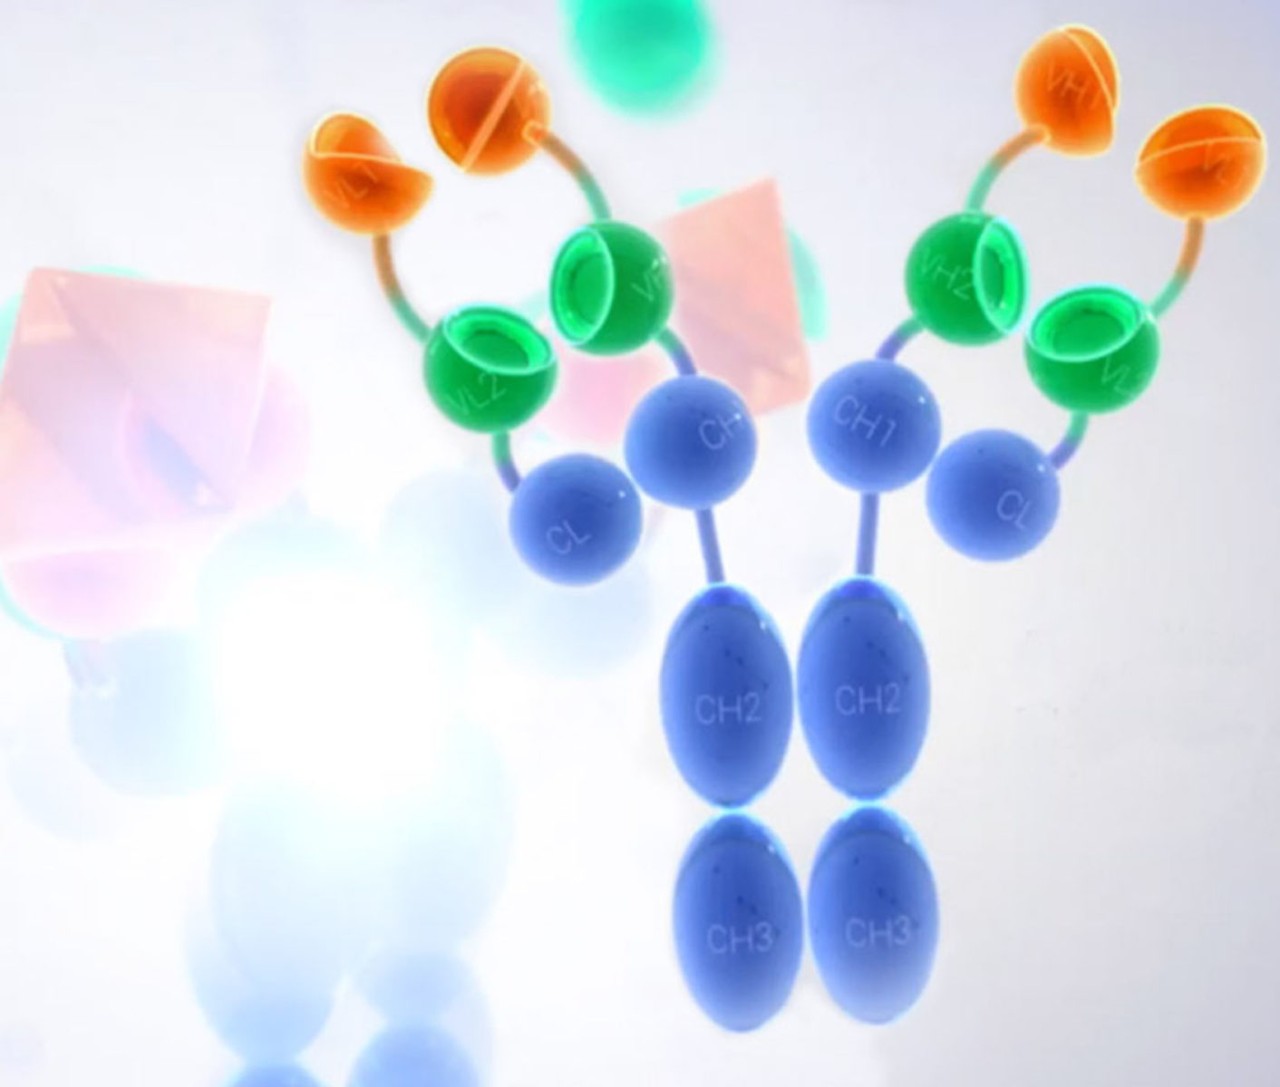 Colorful graphic of antibodies